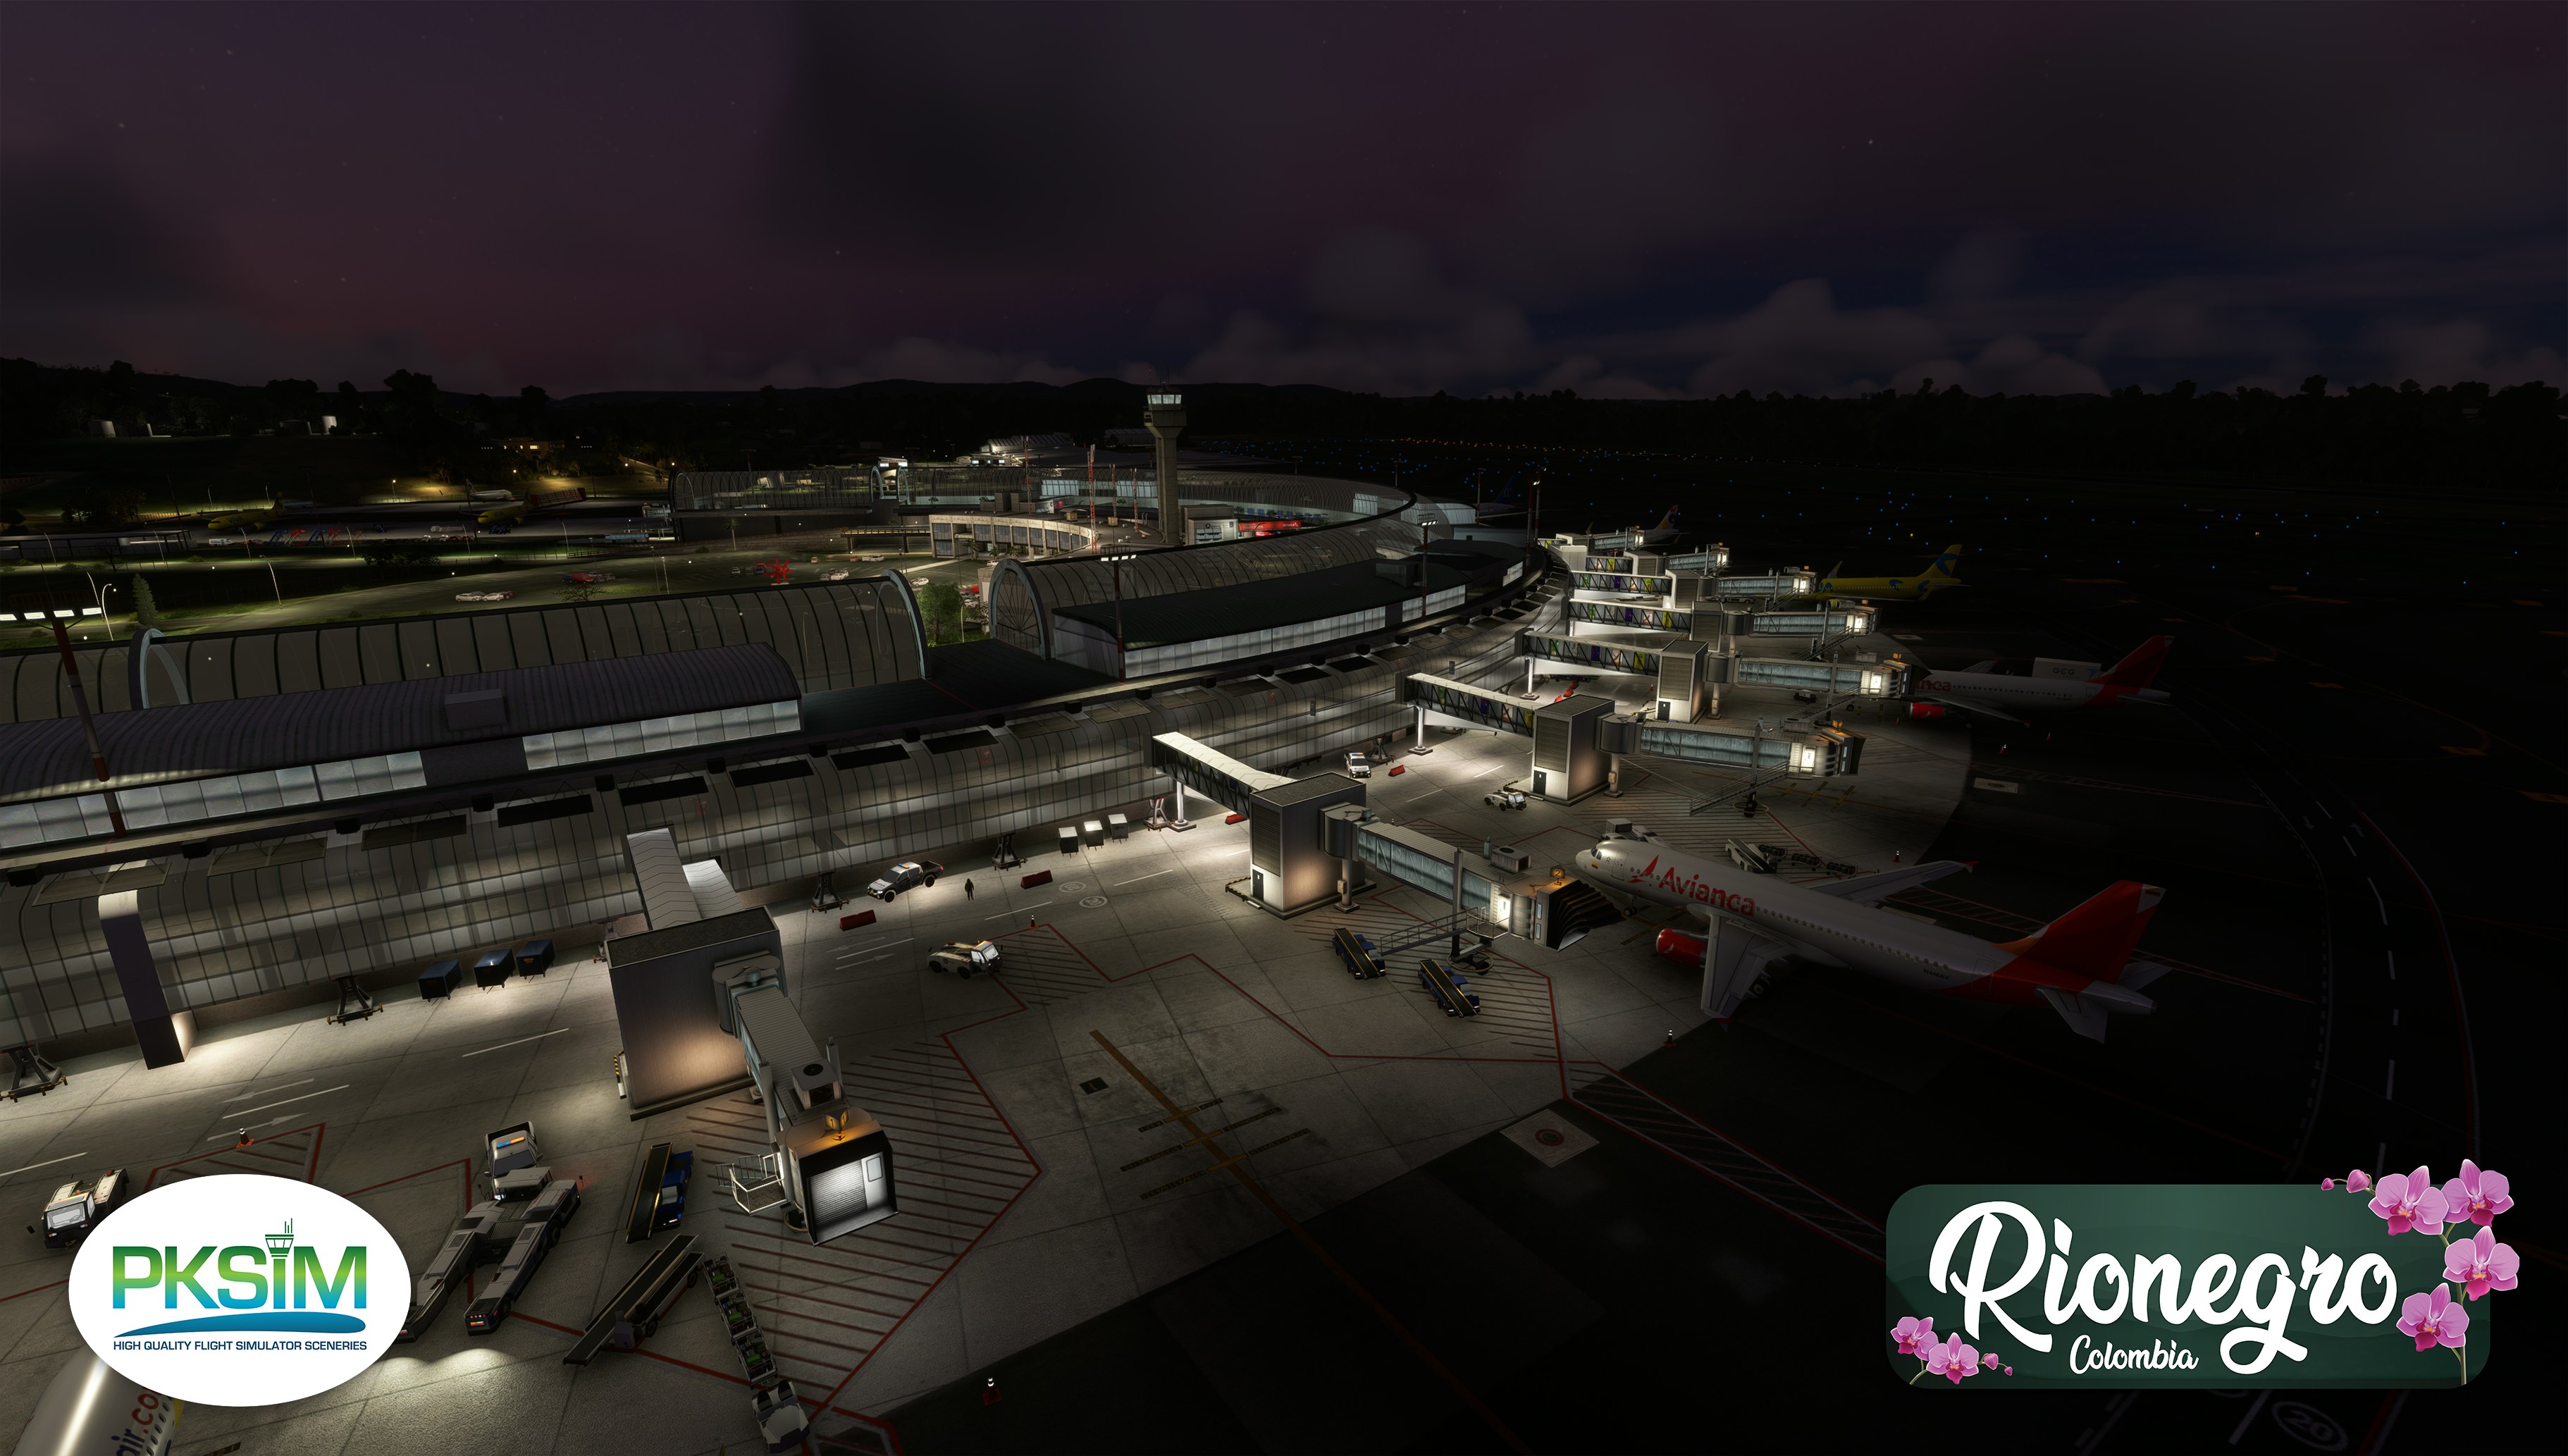 PKSim Releases Medellín International Airport for MSFS